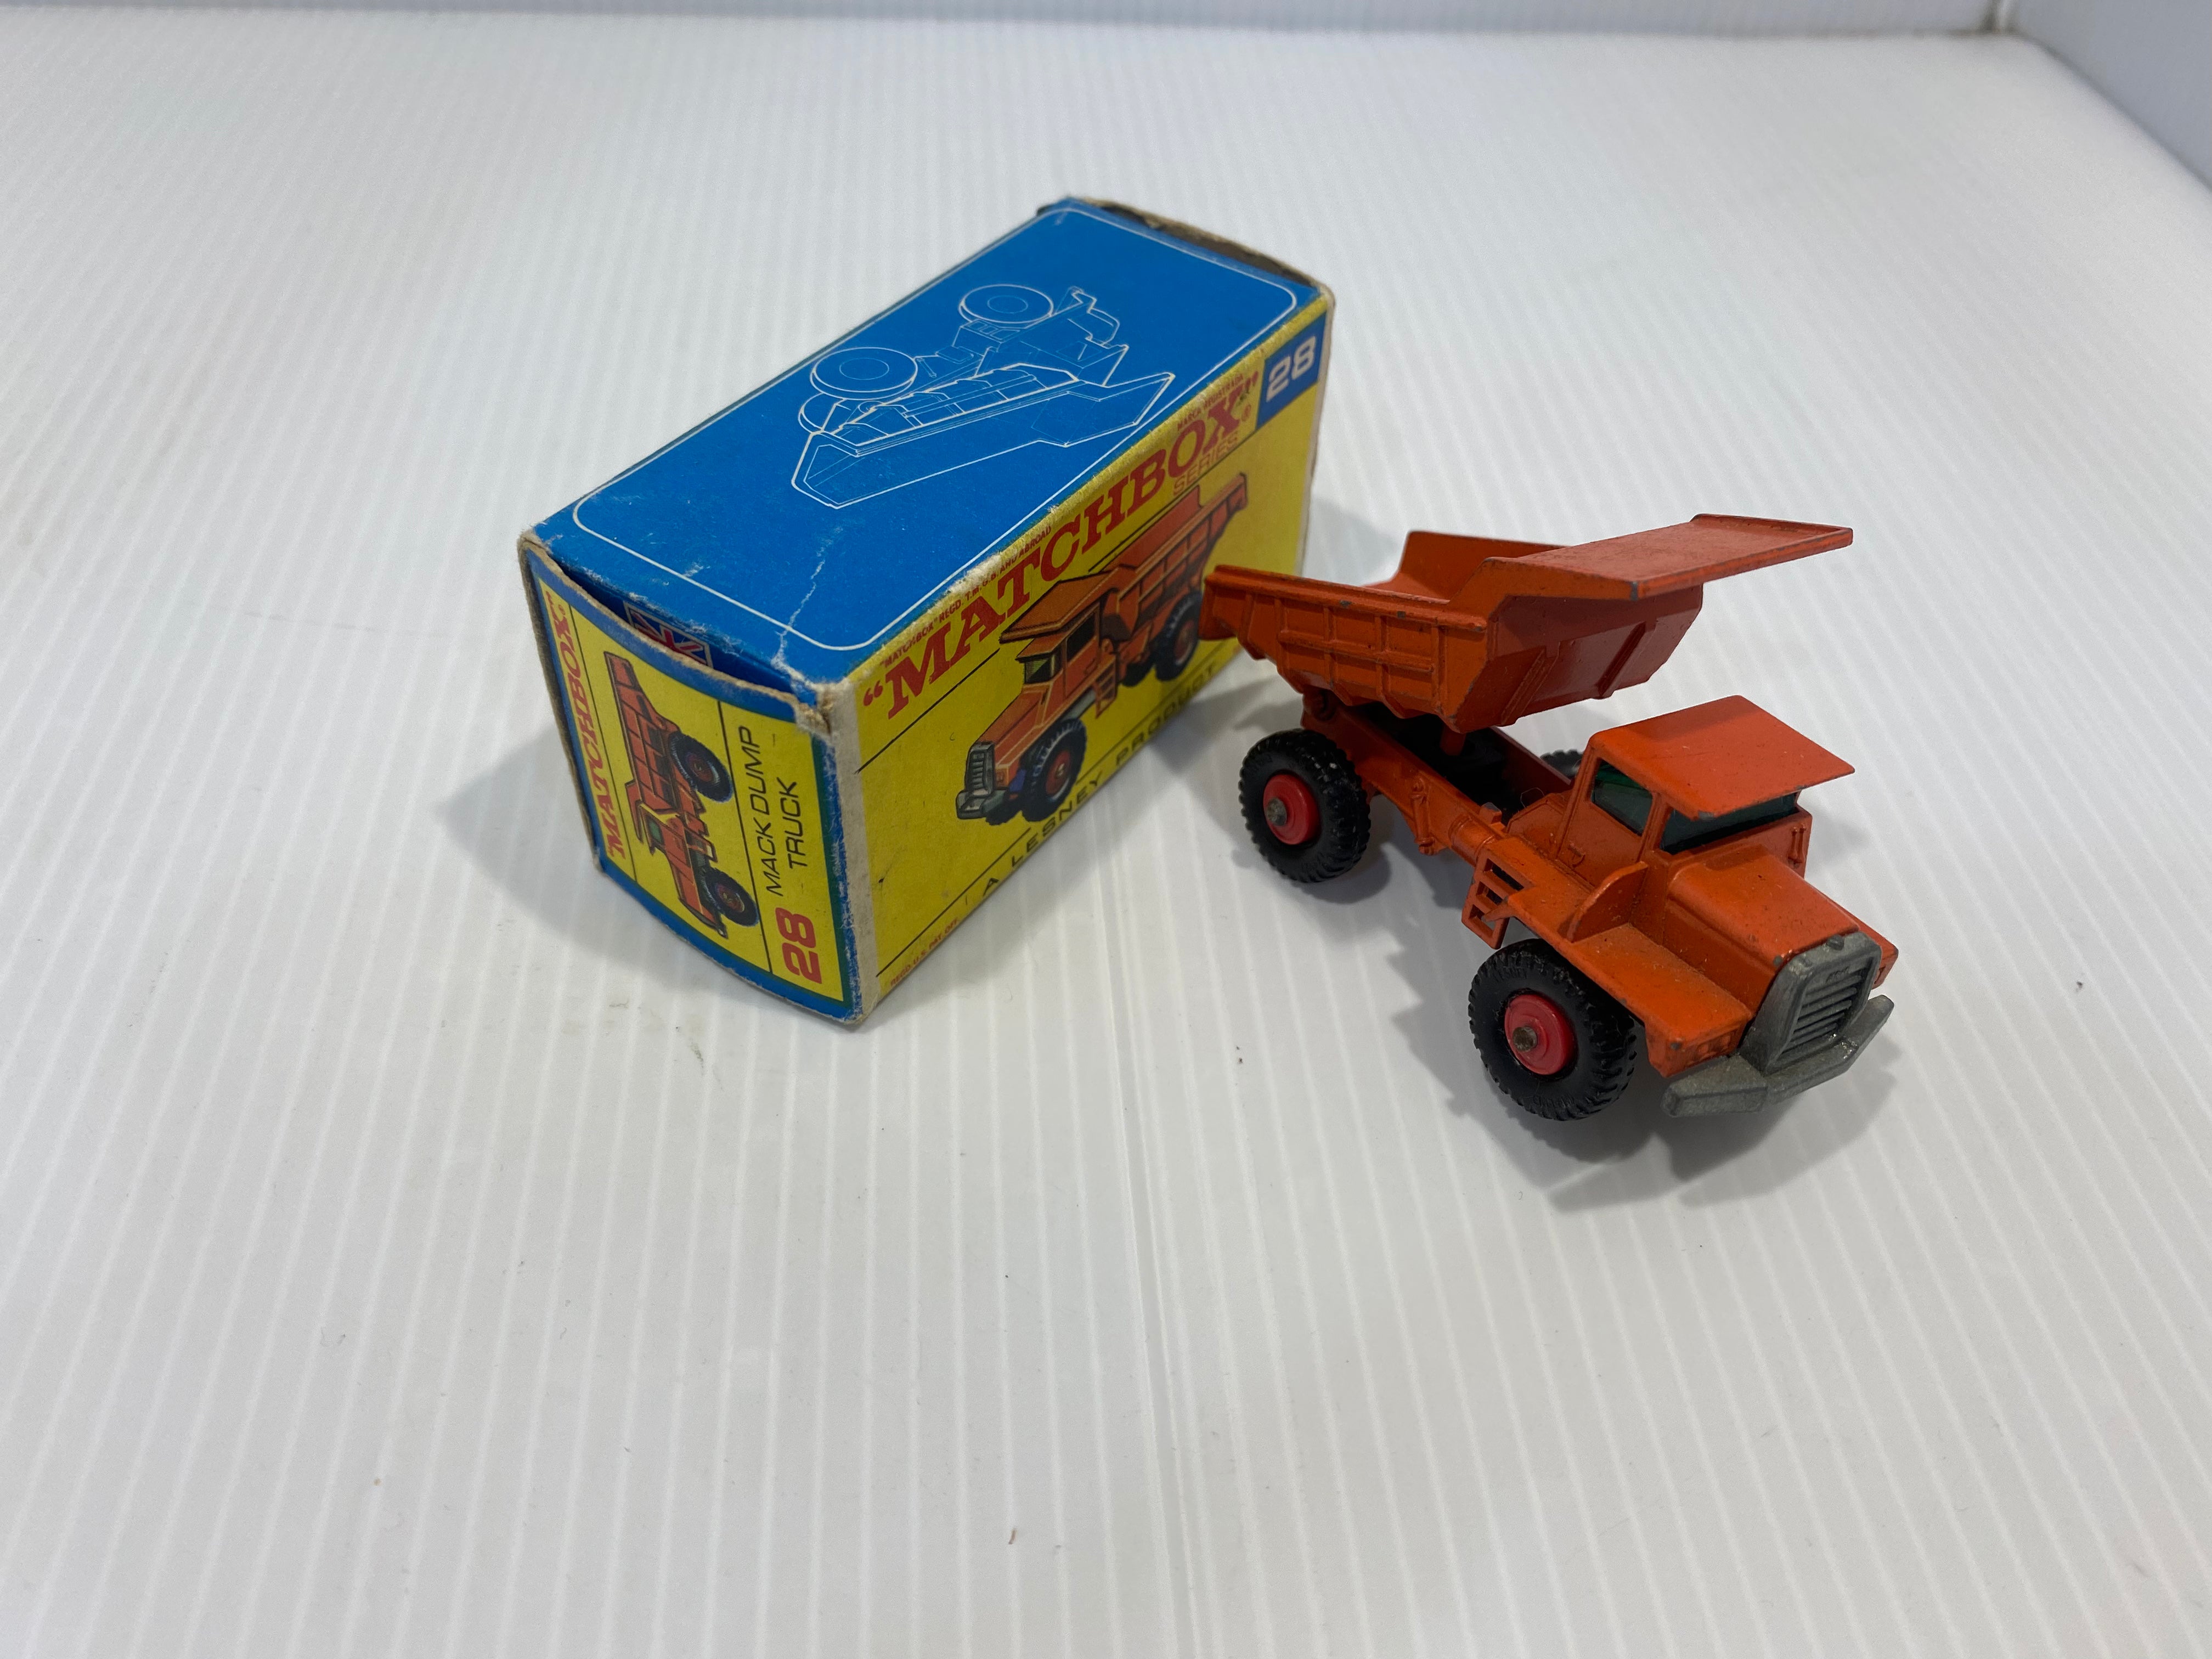 Matchbox Mack Dump Truck with original box